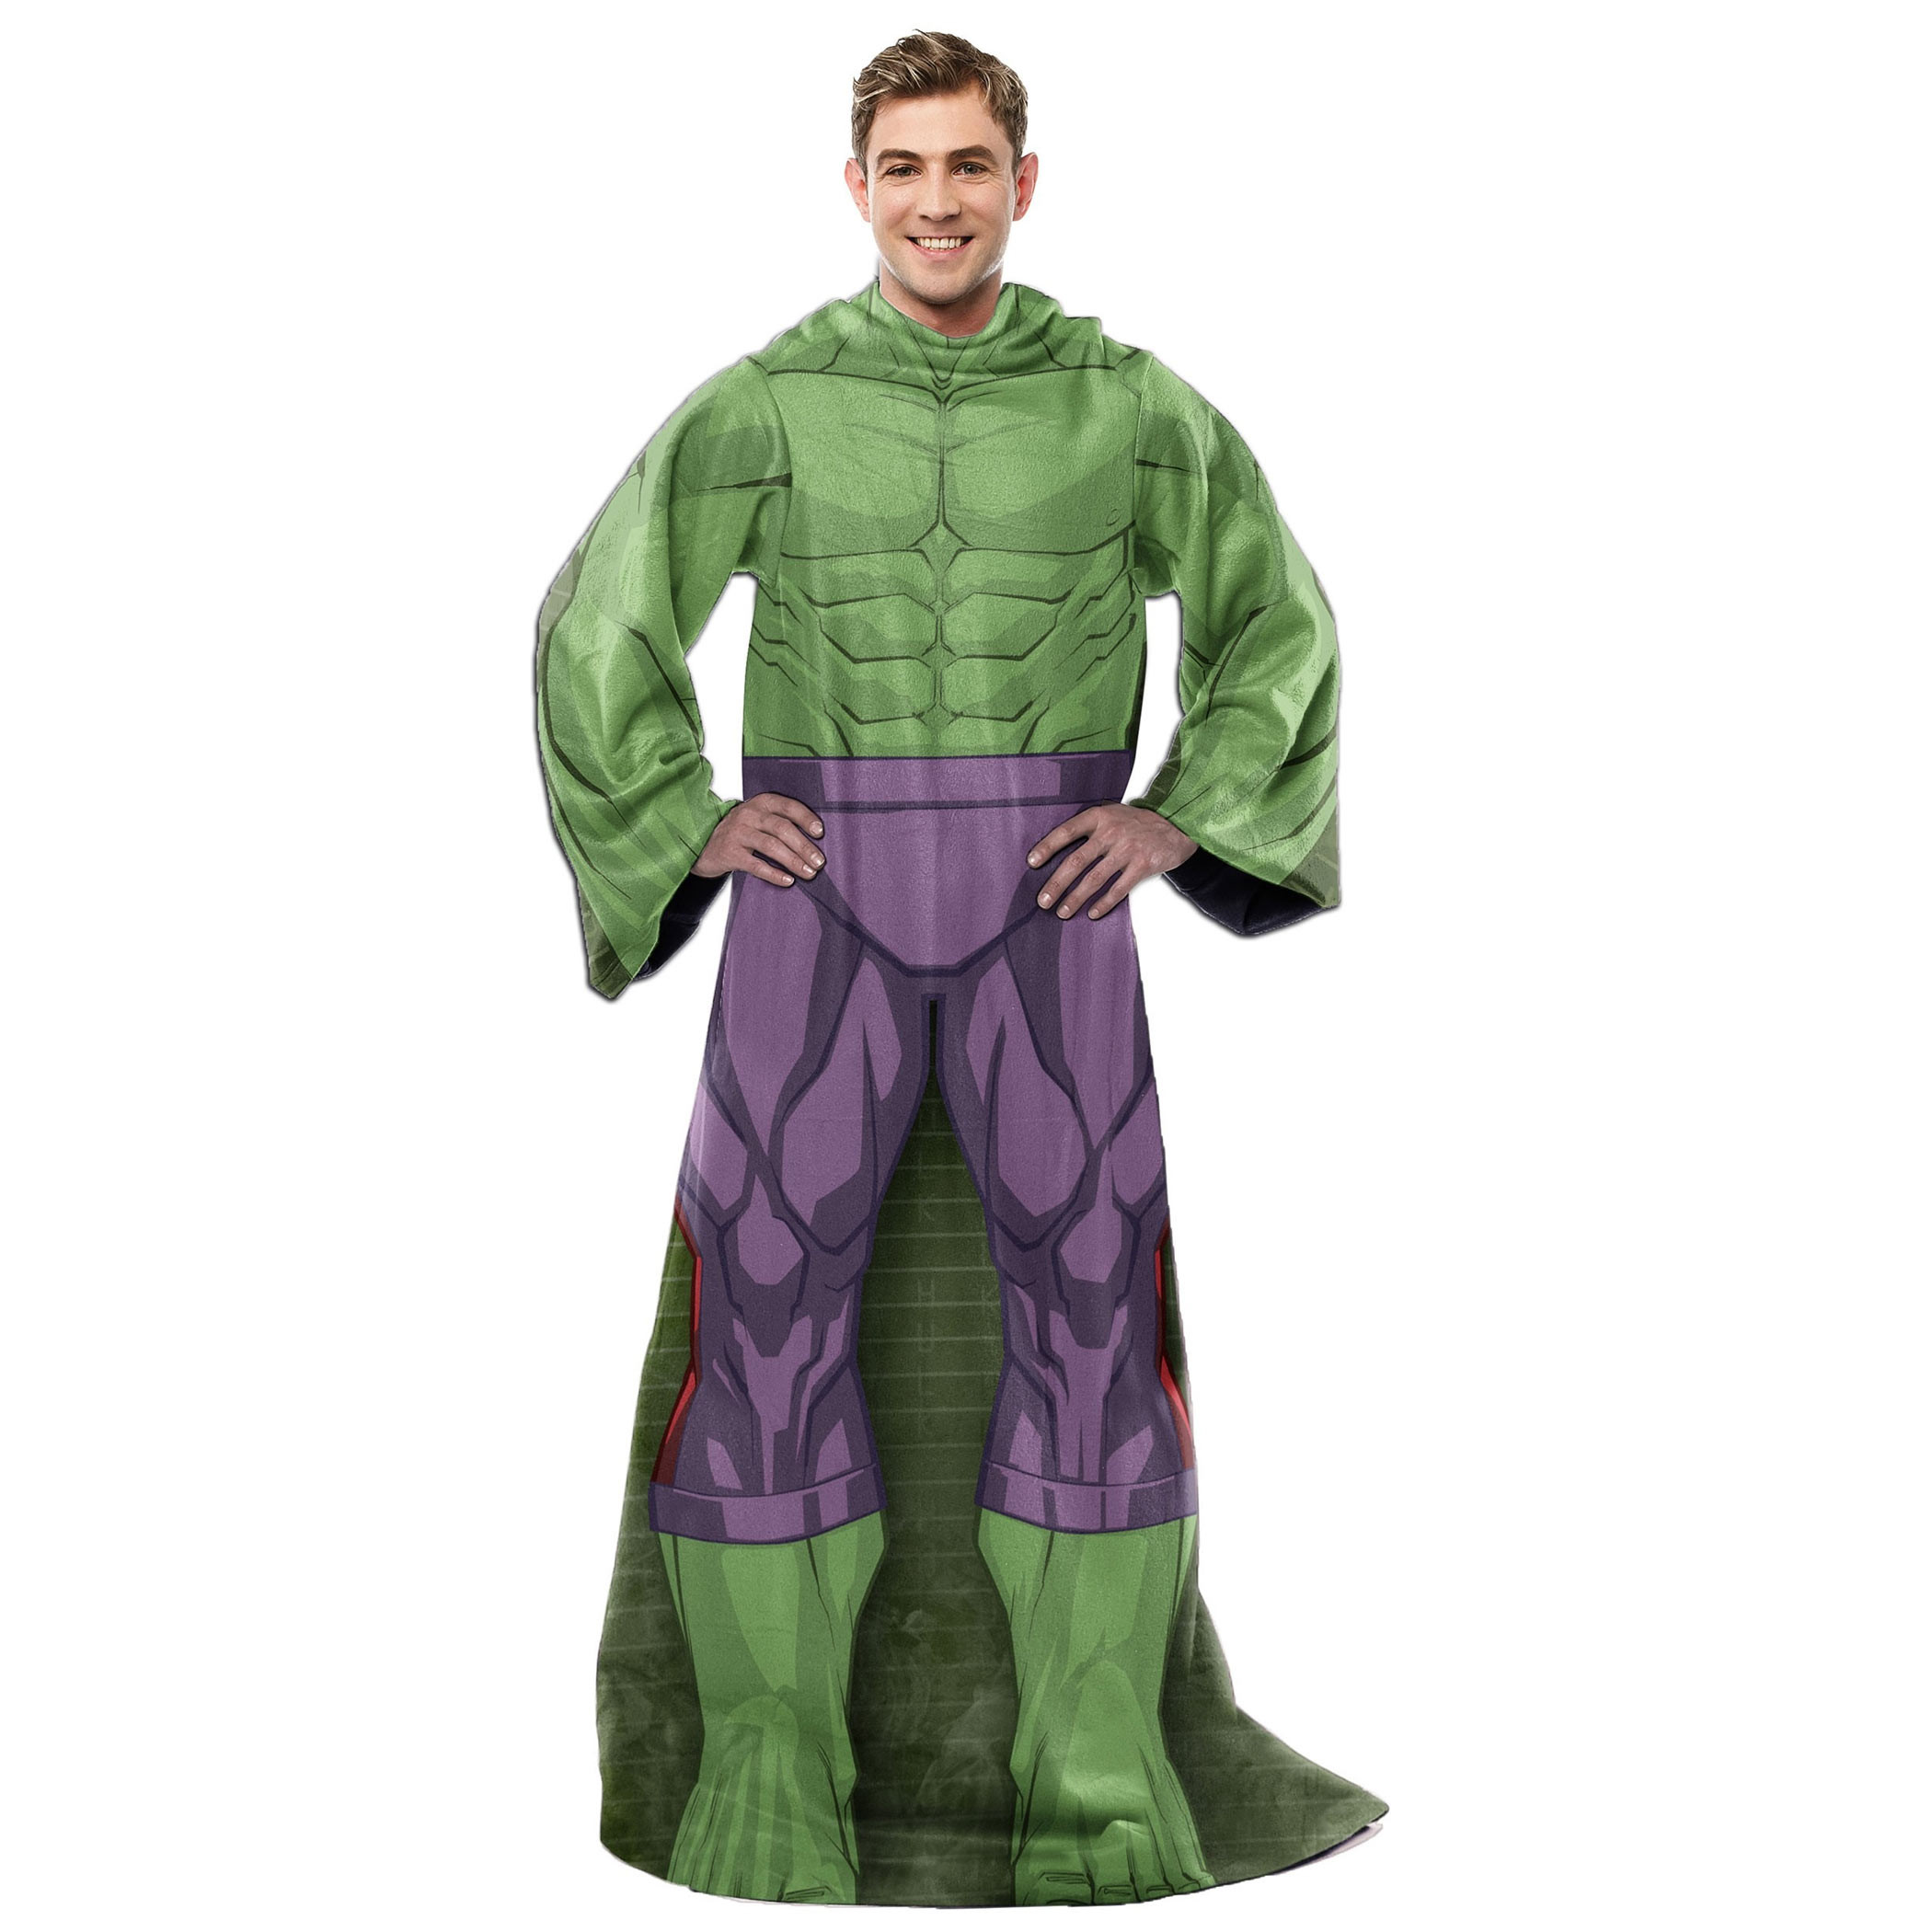 Incredible Hulk Costume Adult Throw Blanket With Sleeves